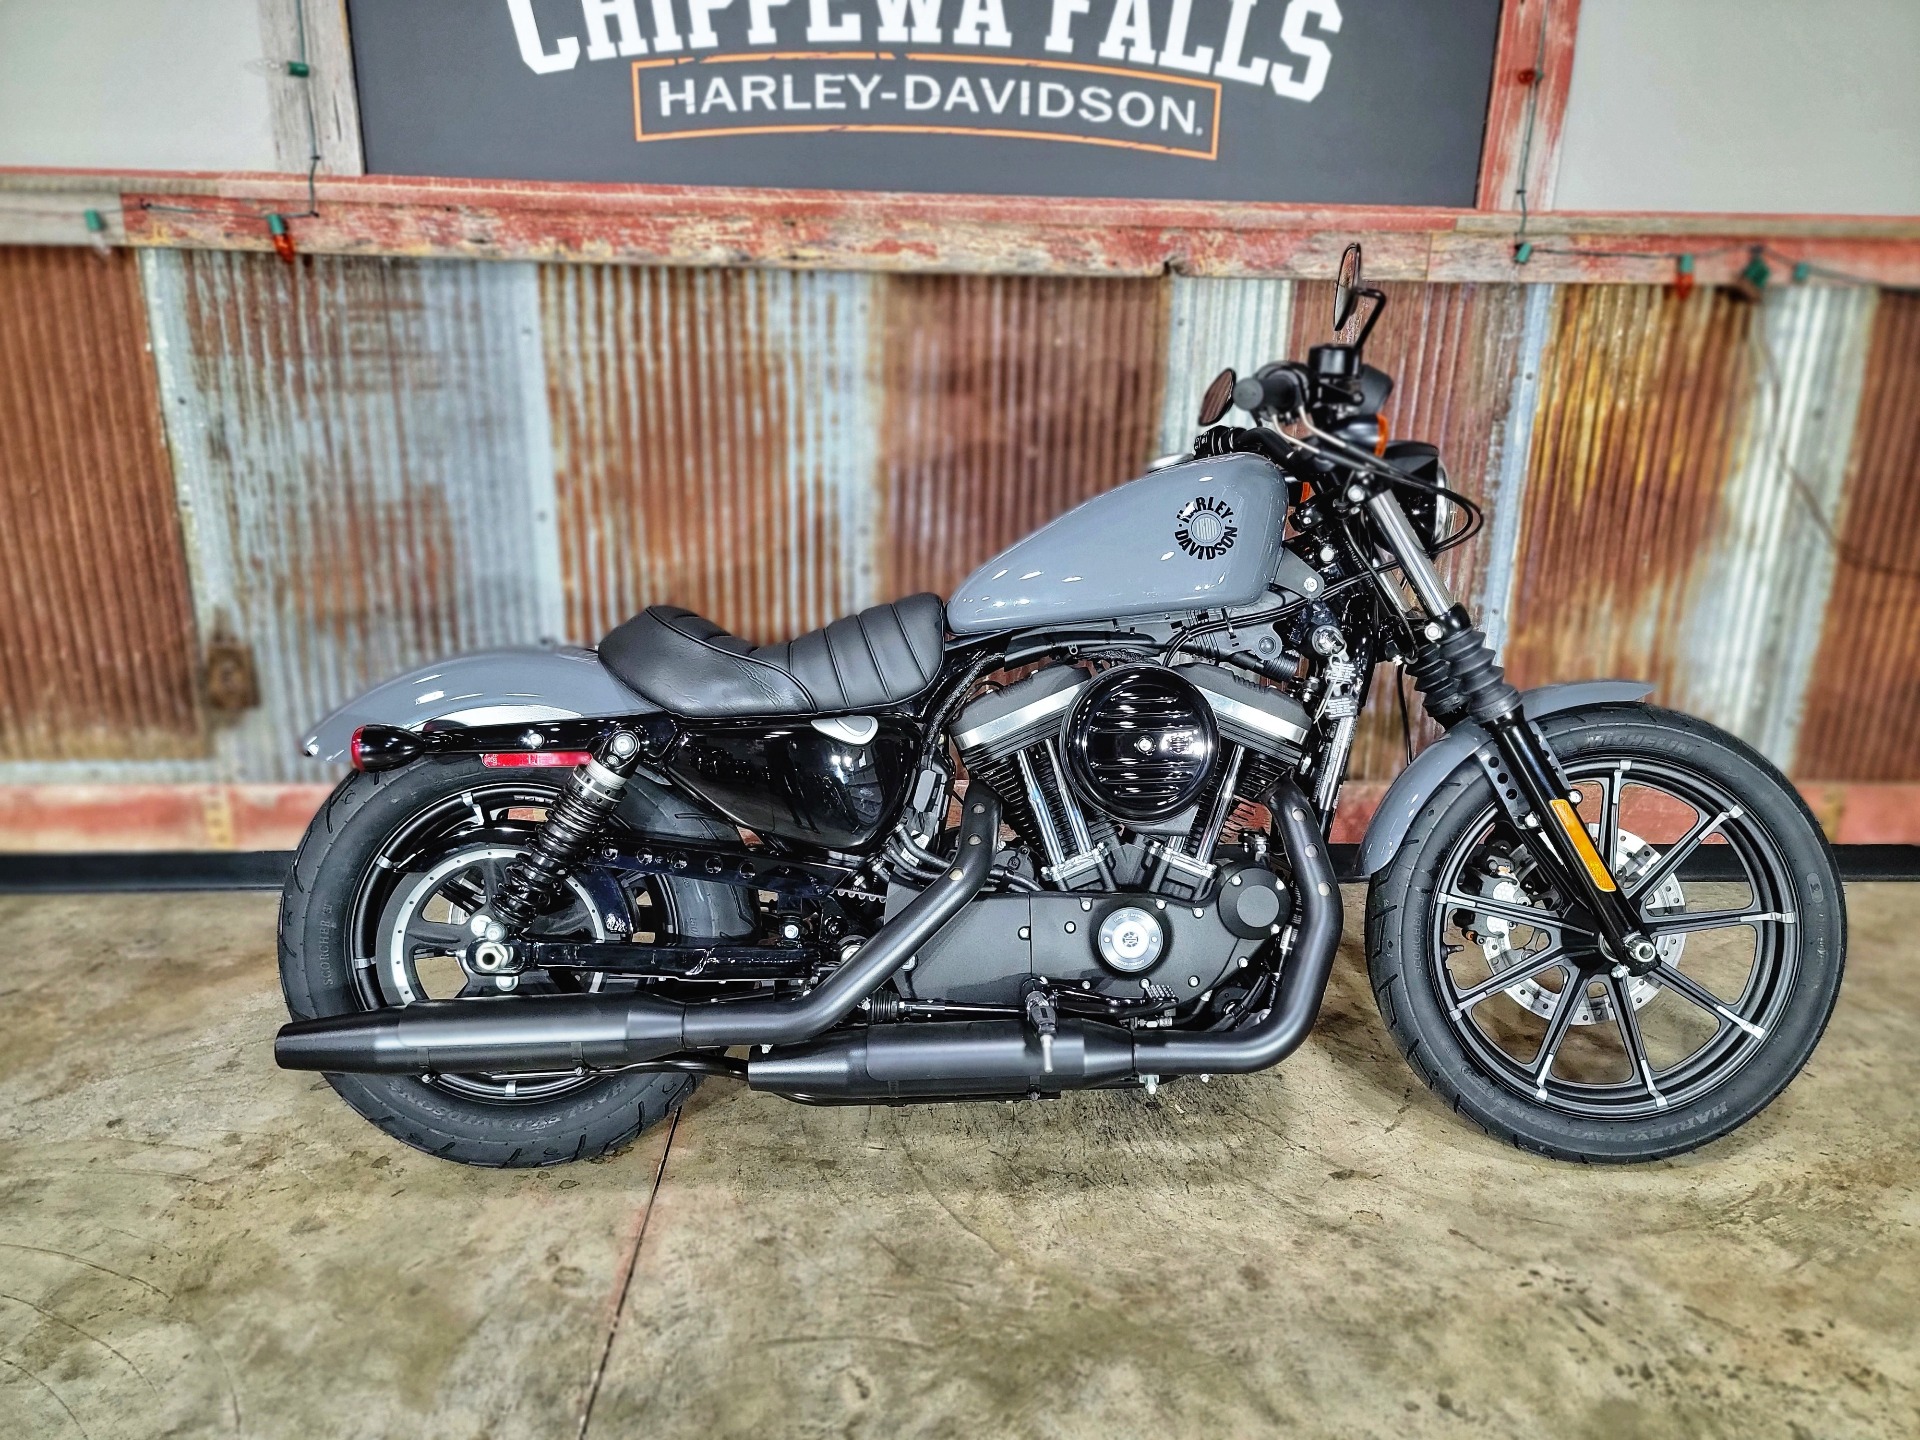 2022 Harley-Davidson Iron 883™ in Chippewa Falls, Wisconsin - Photo 1